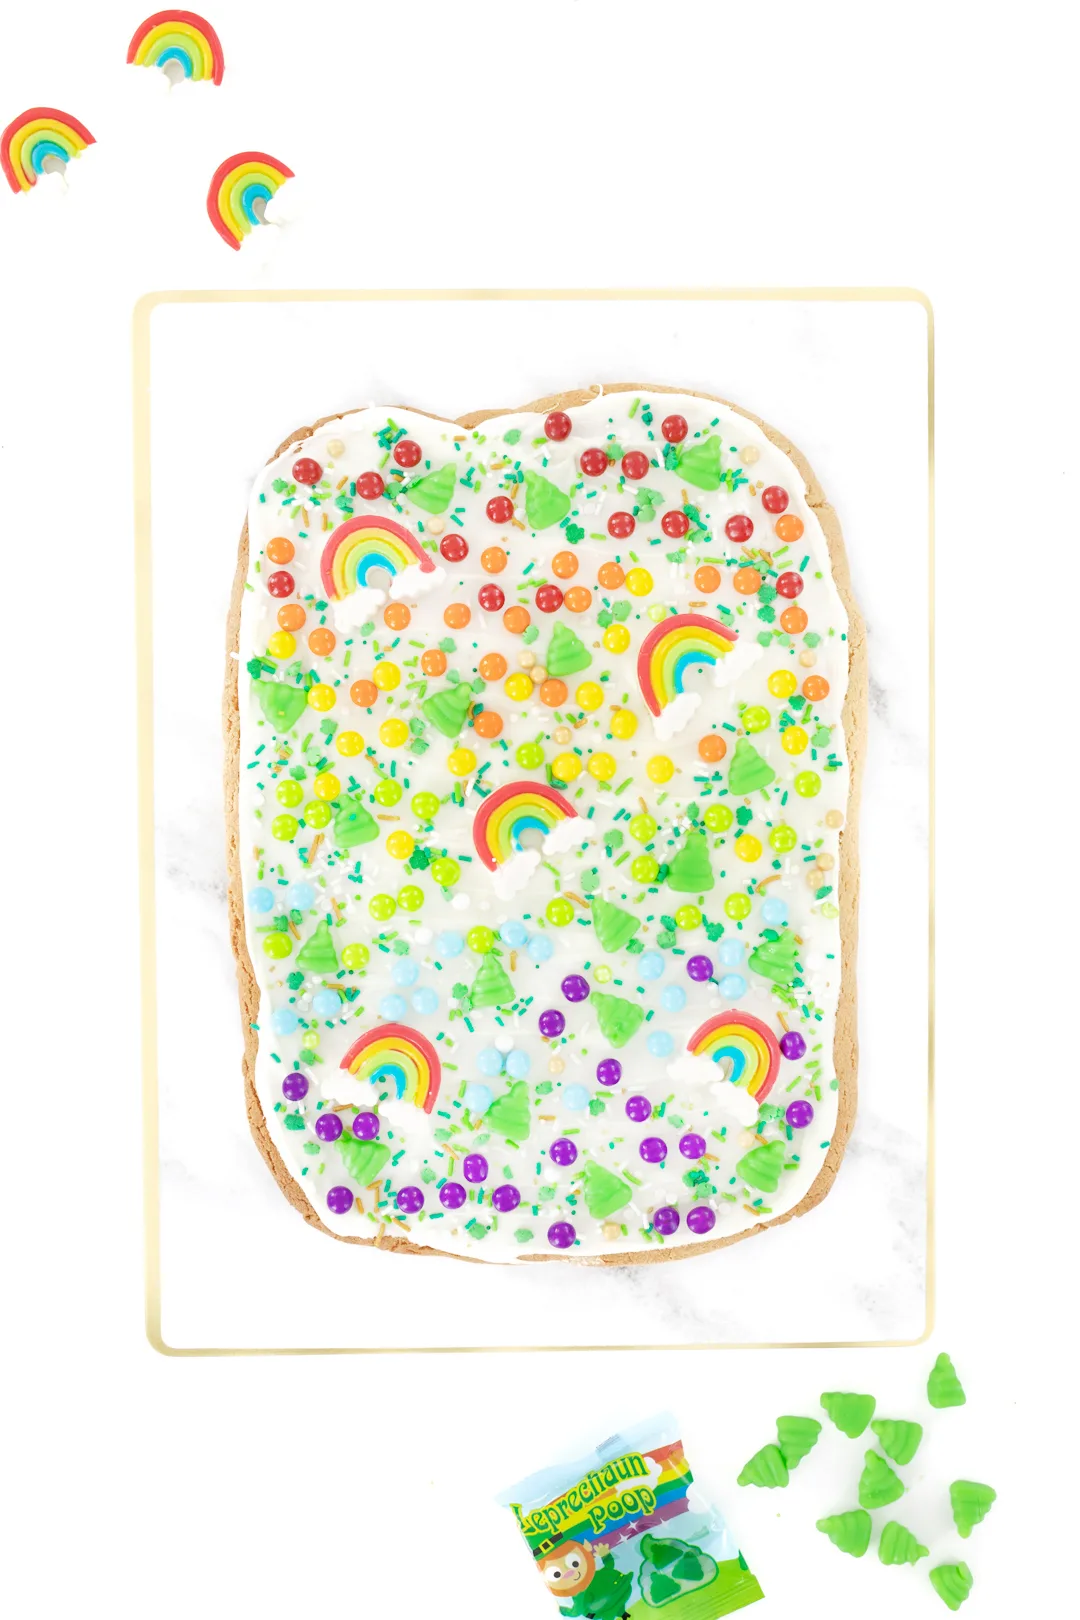 pretty rainbow cookie bark with rainbow candies, rainbow gummies and Leprechaun poop candies.